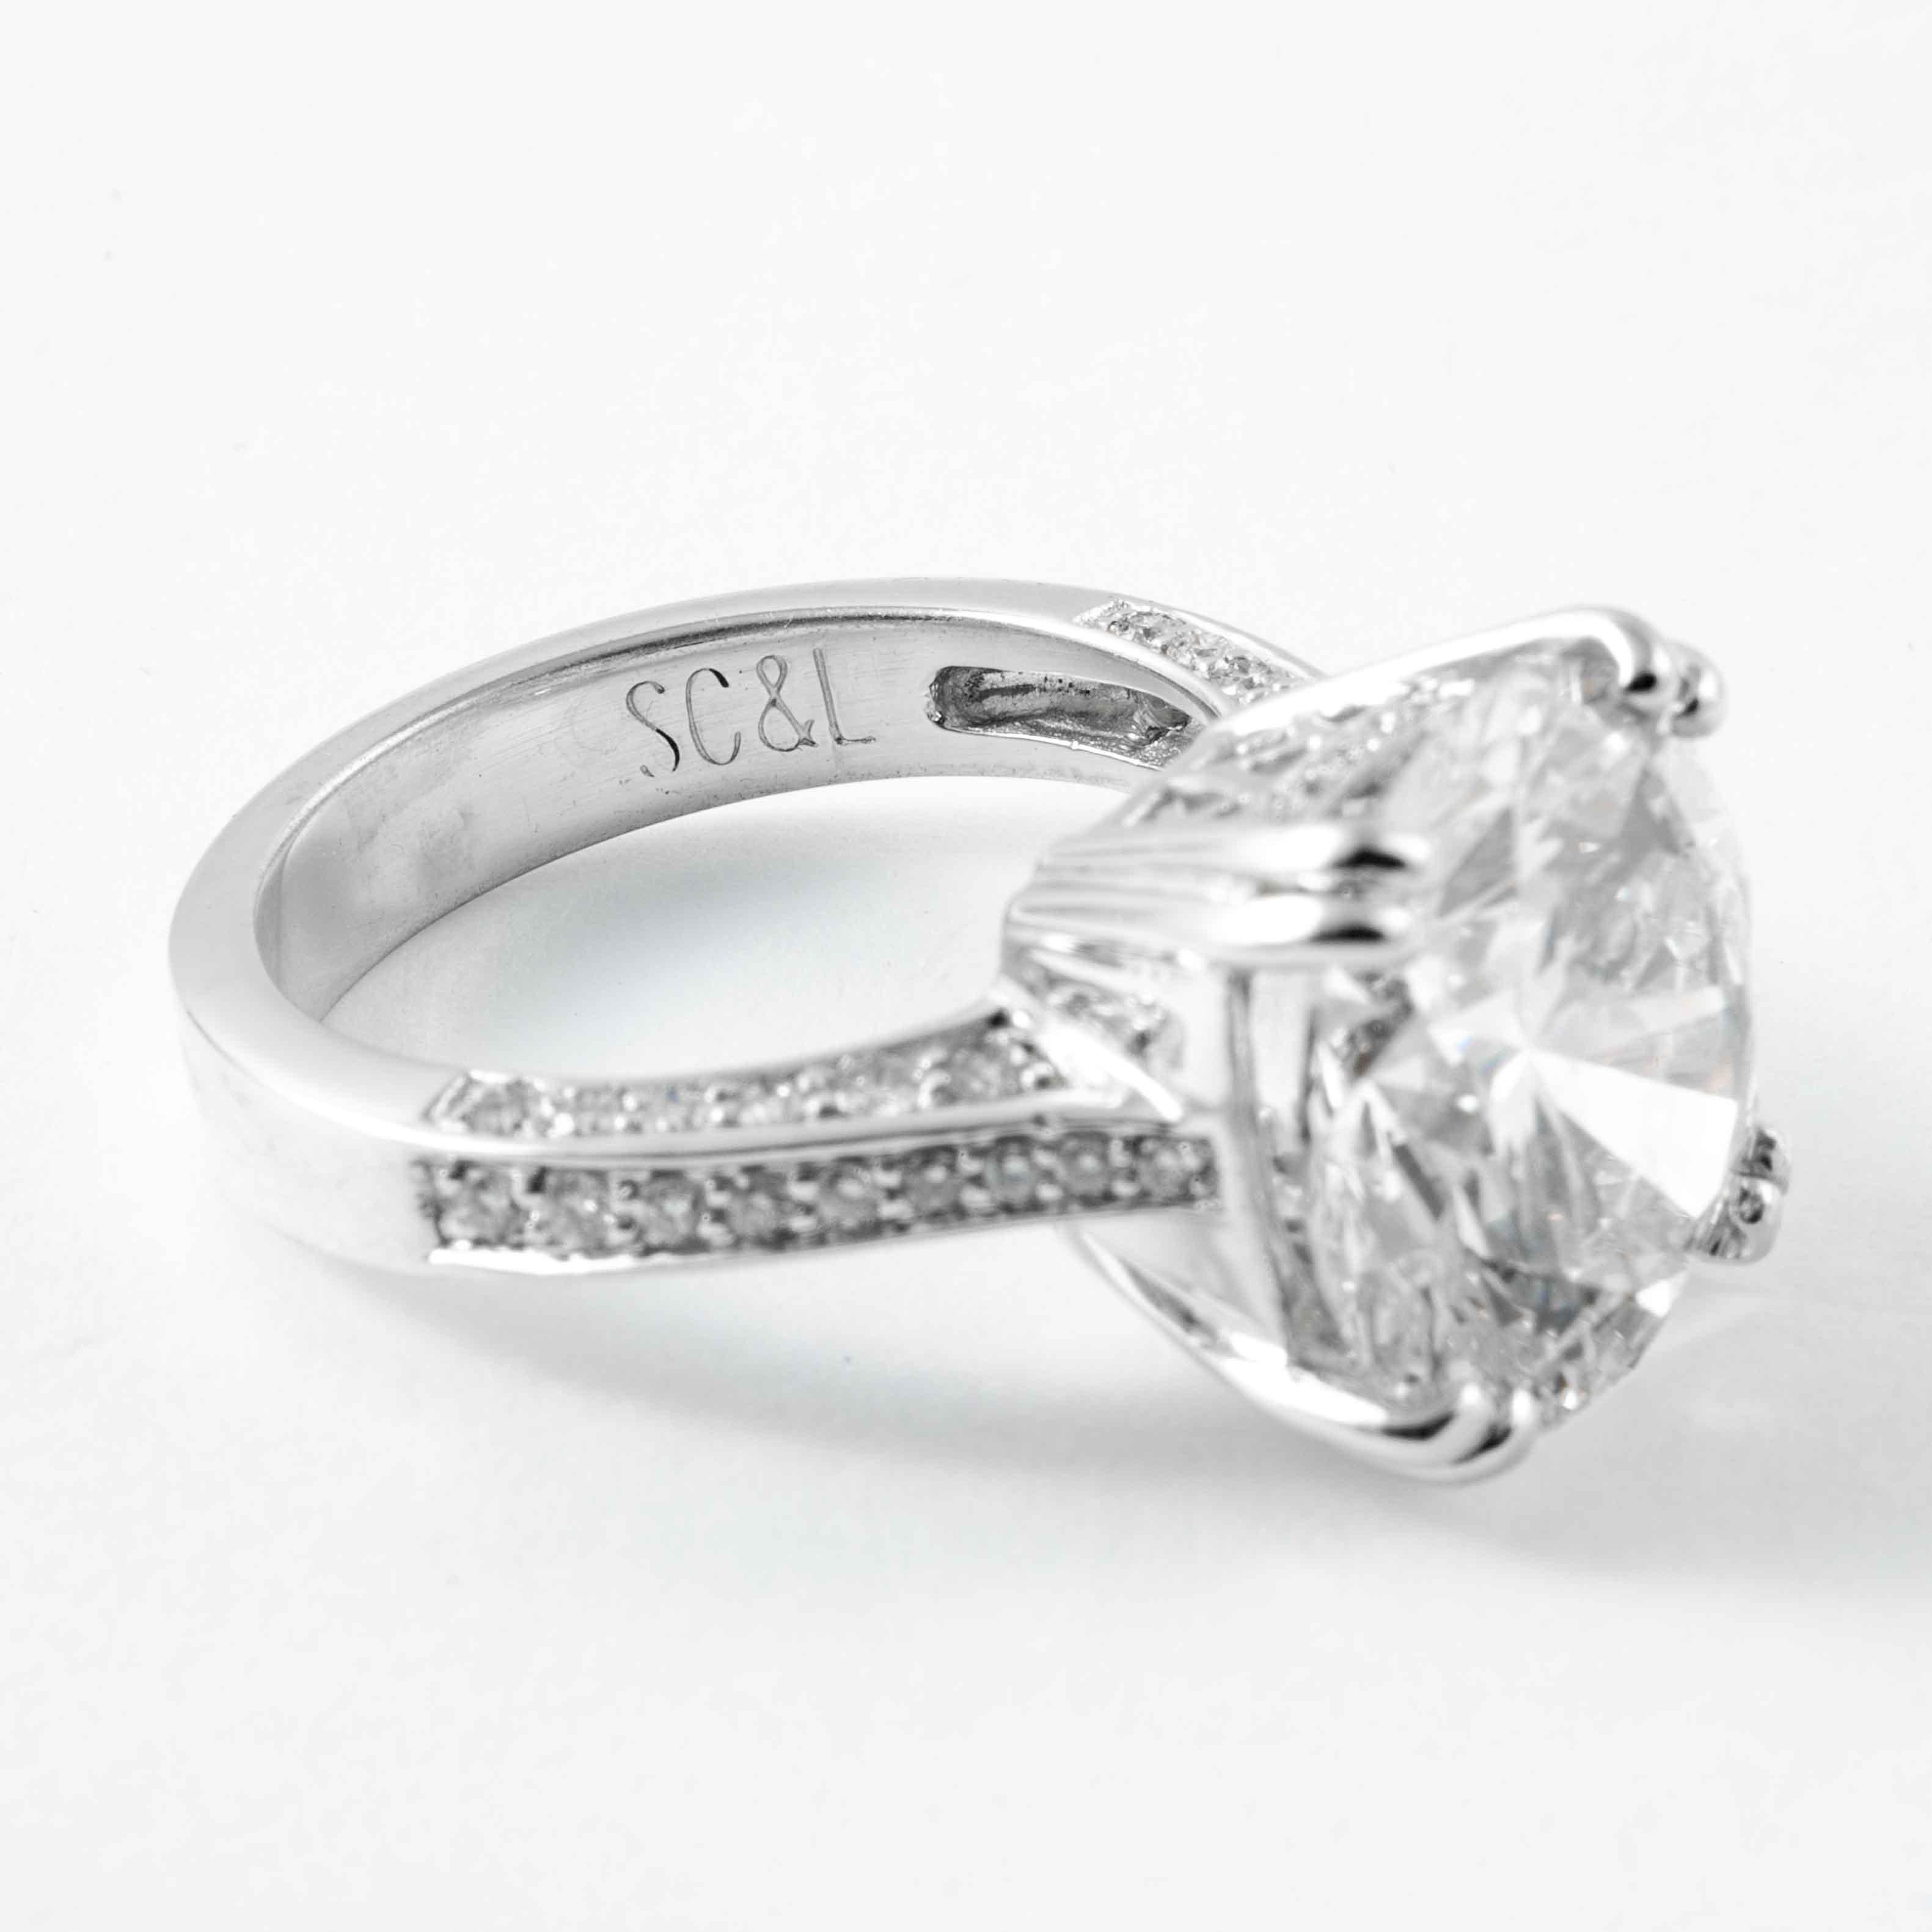 Shreve, Crump & Low 8.3 Carat J SI2 Round Brilliant Cut Diamond Ring In New Condition For Sale In Boston, MA